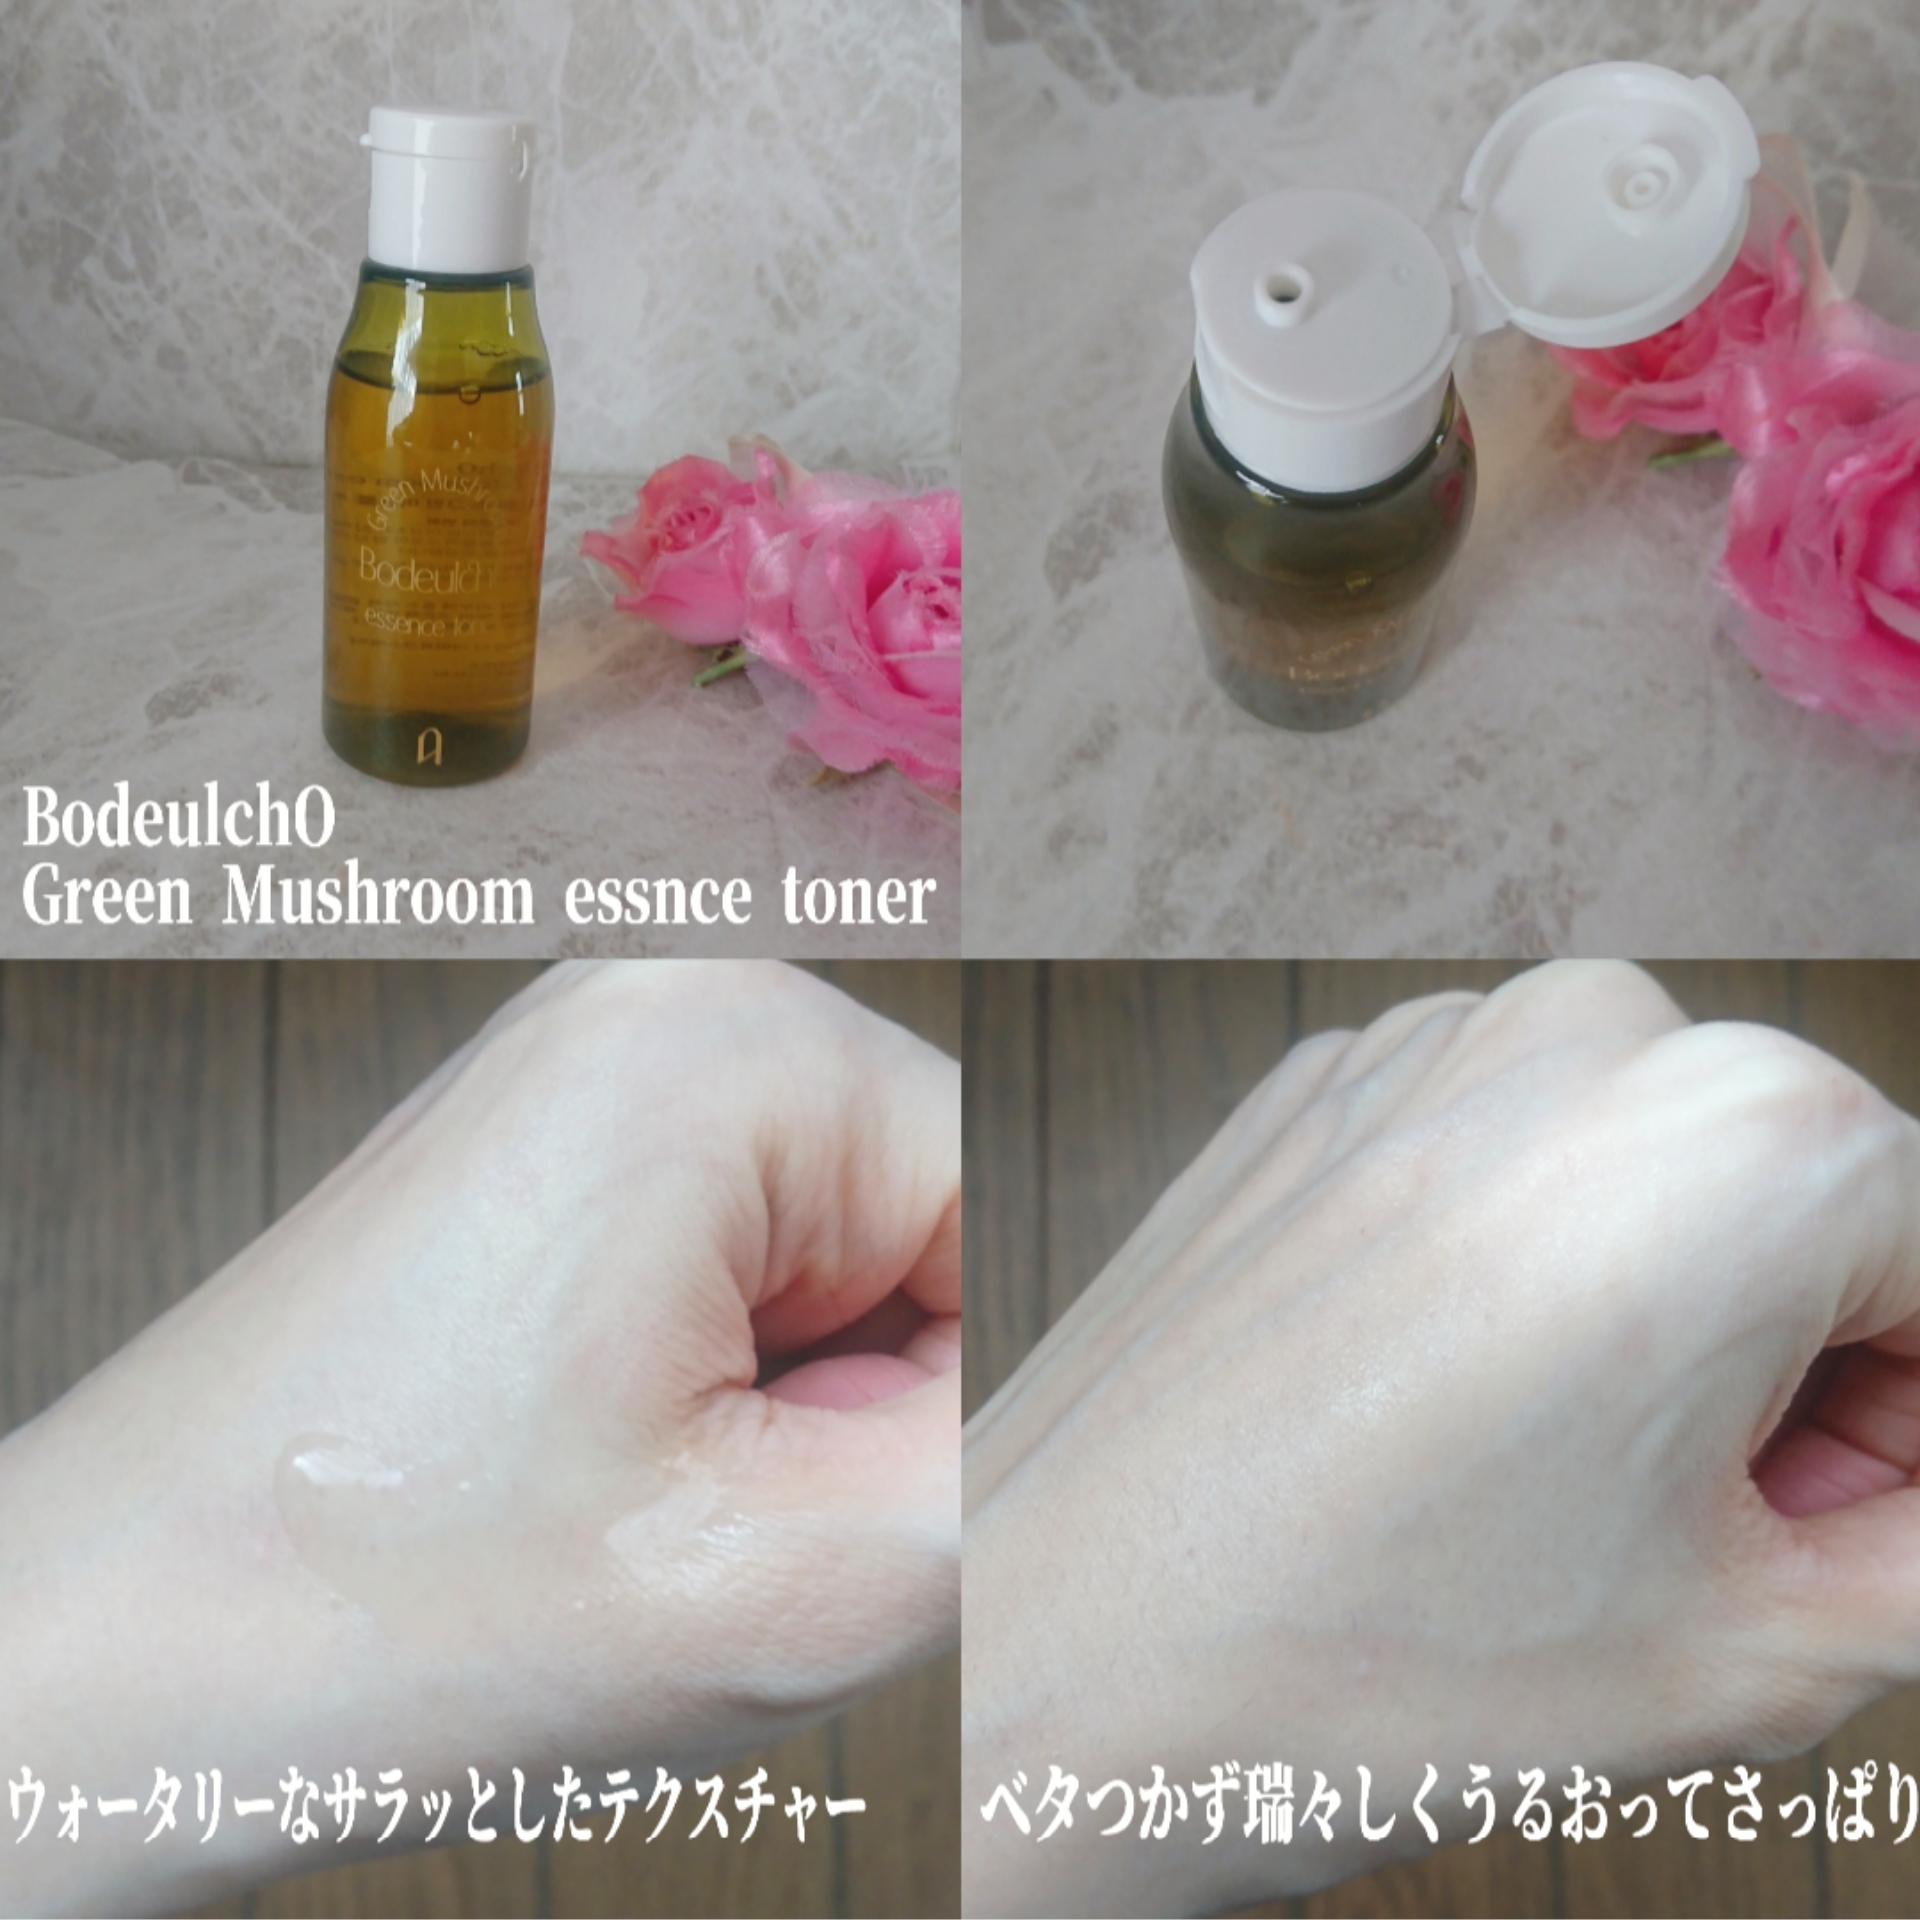 Amiok BodeulchO Relaxing Ampoure wash pack 60ml

BodeulchO Green Mushroom essnce toner 60mlを使ったYuKaRi♡さんのクチコミ画像5